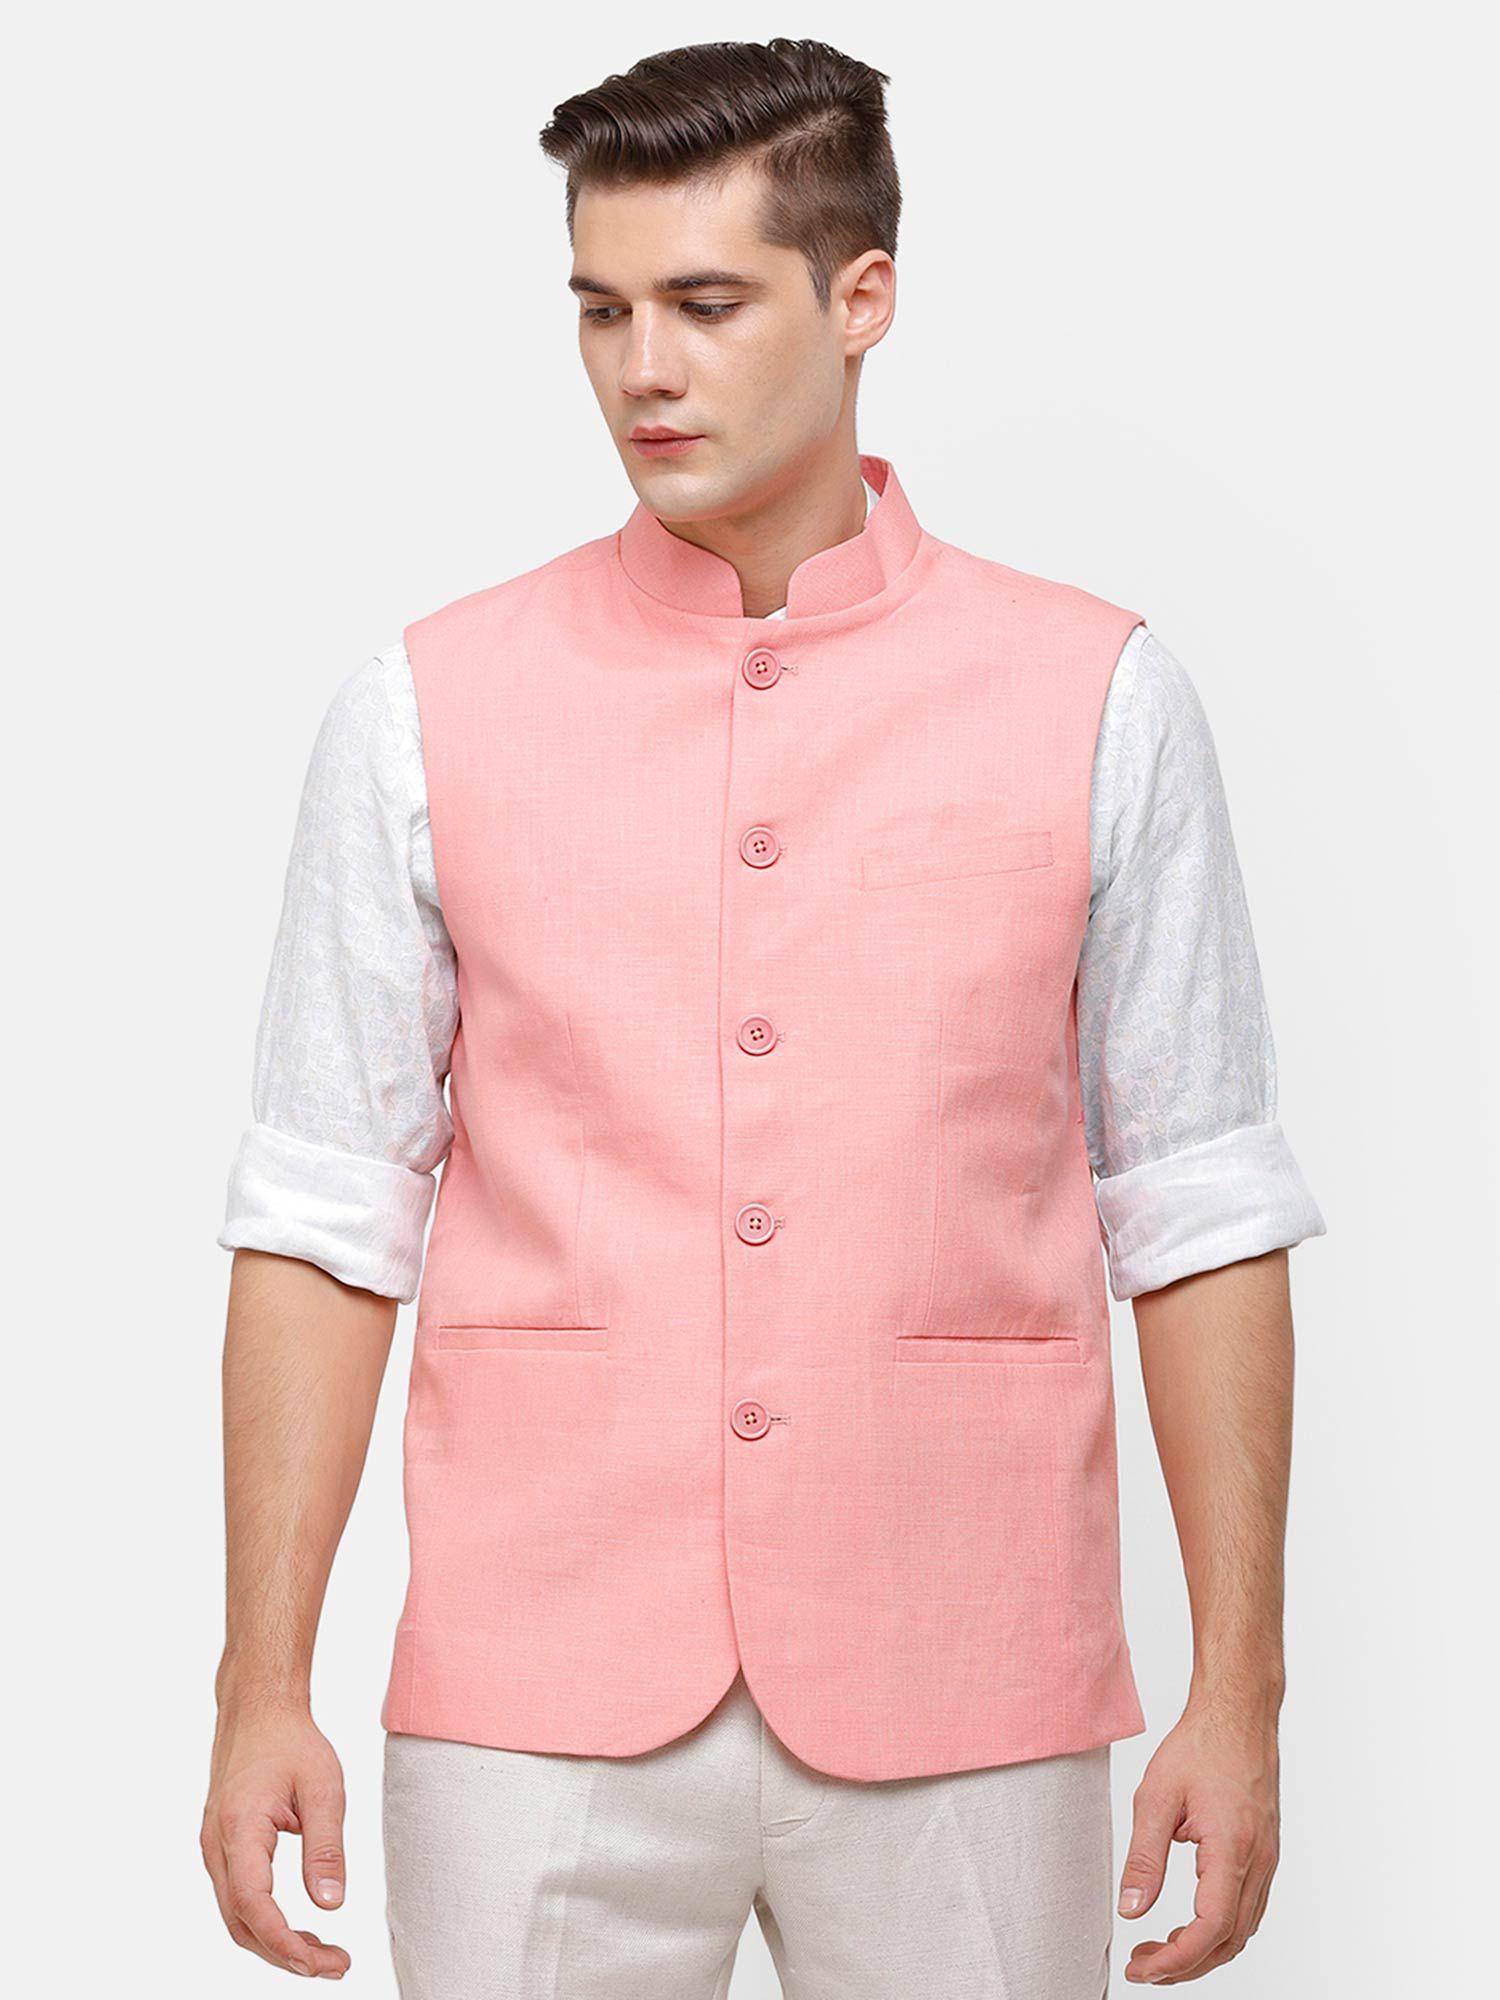 men's pure linen pink solid nehru jacket